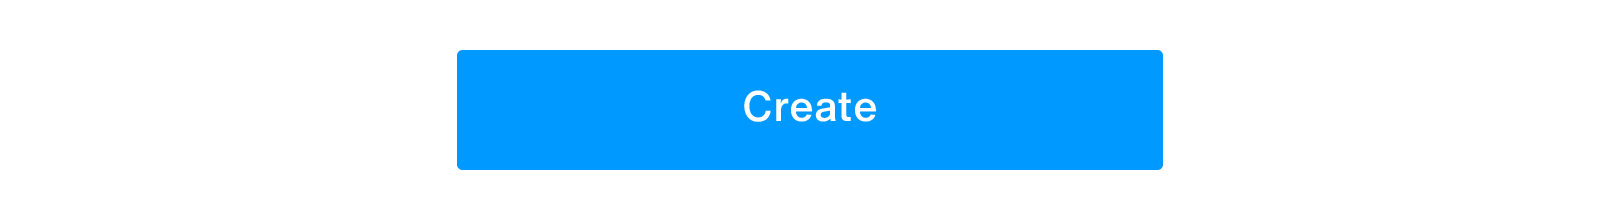 Create Button 03